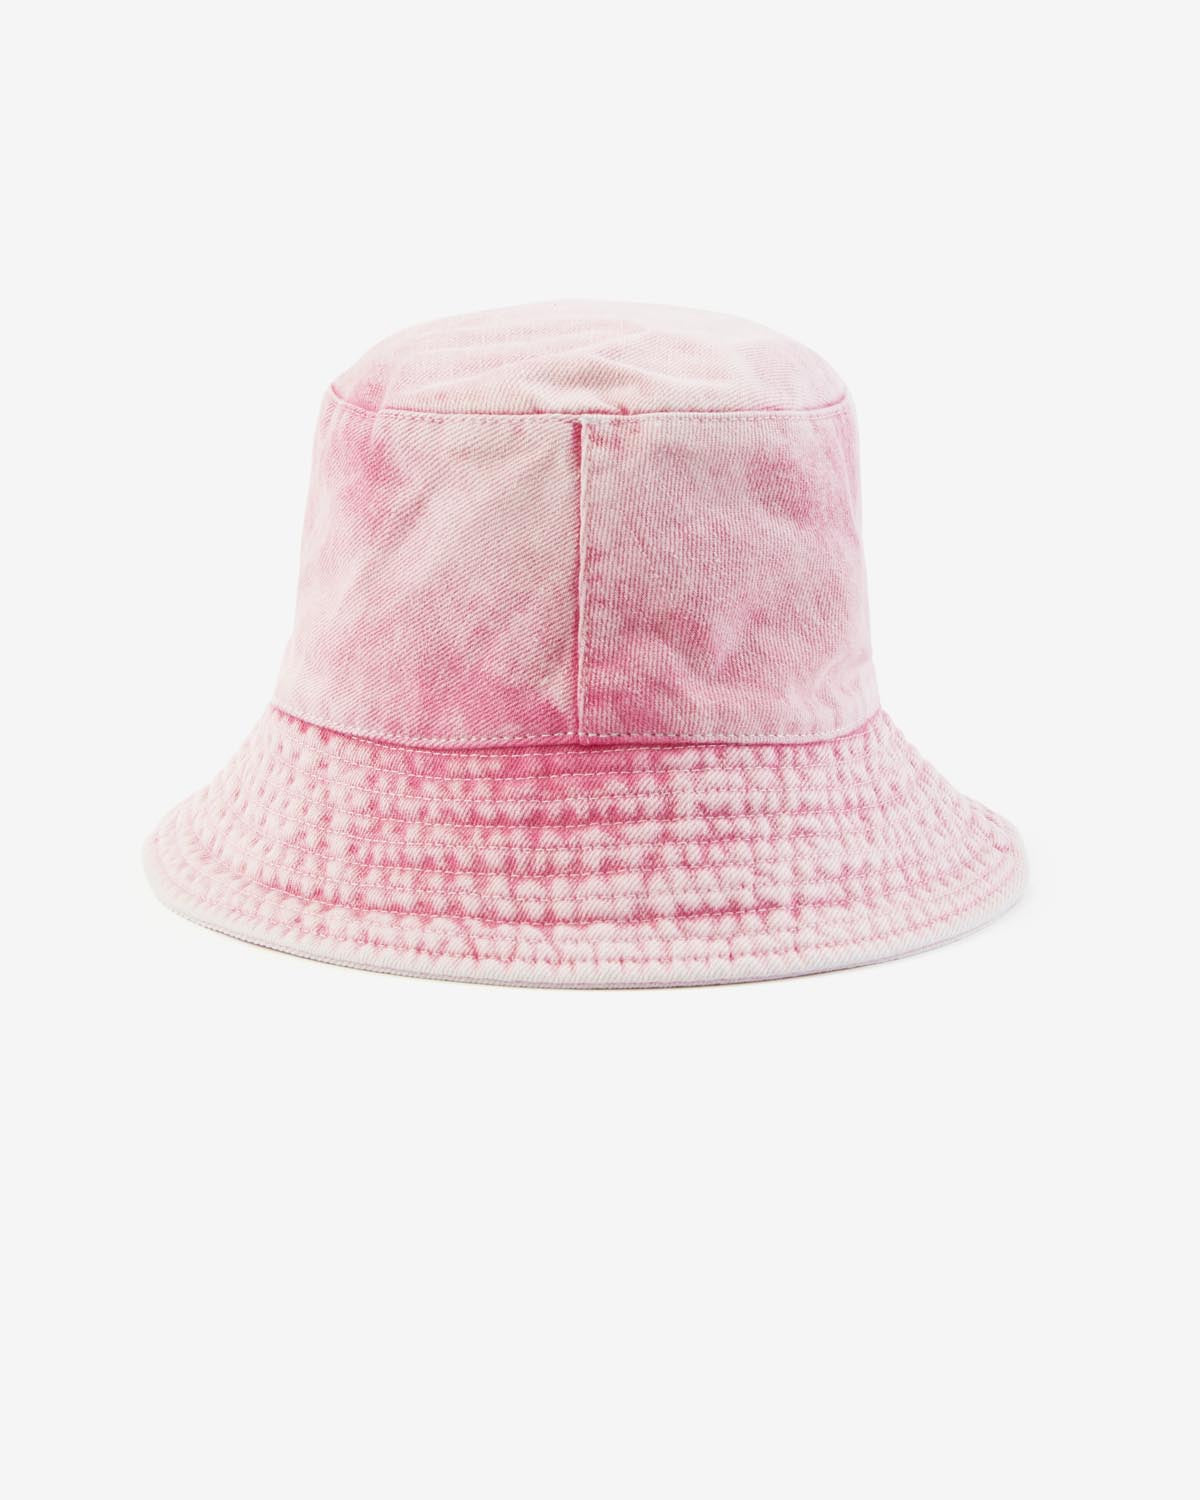 Giorgia cappello Woman Light pink 3